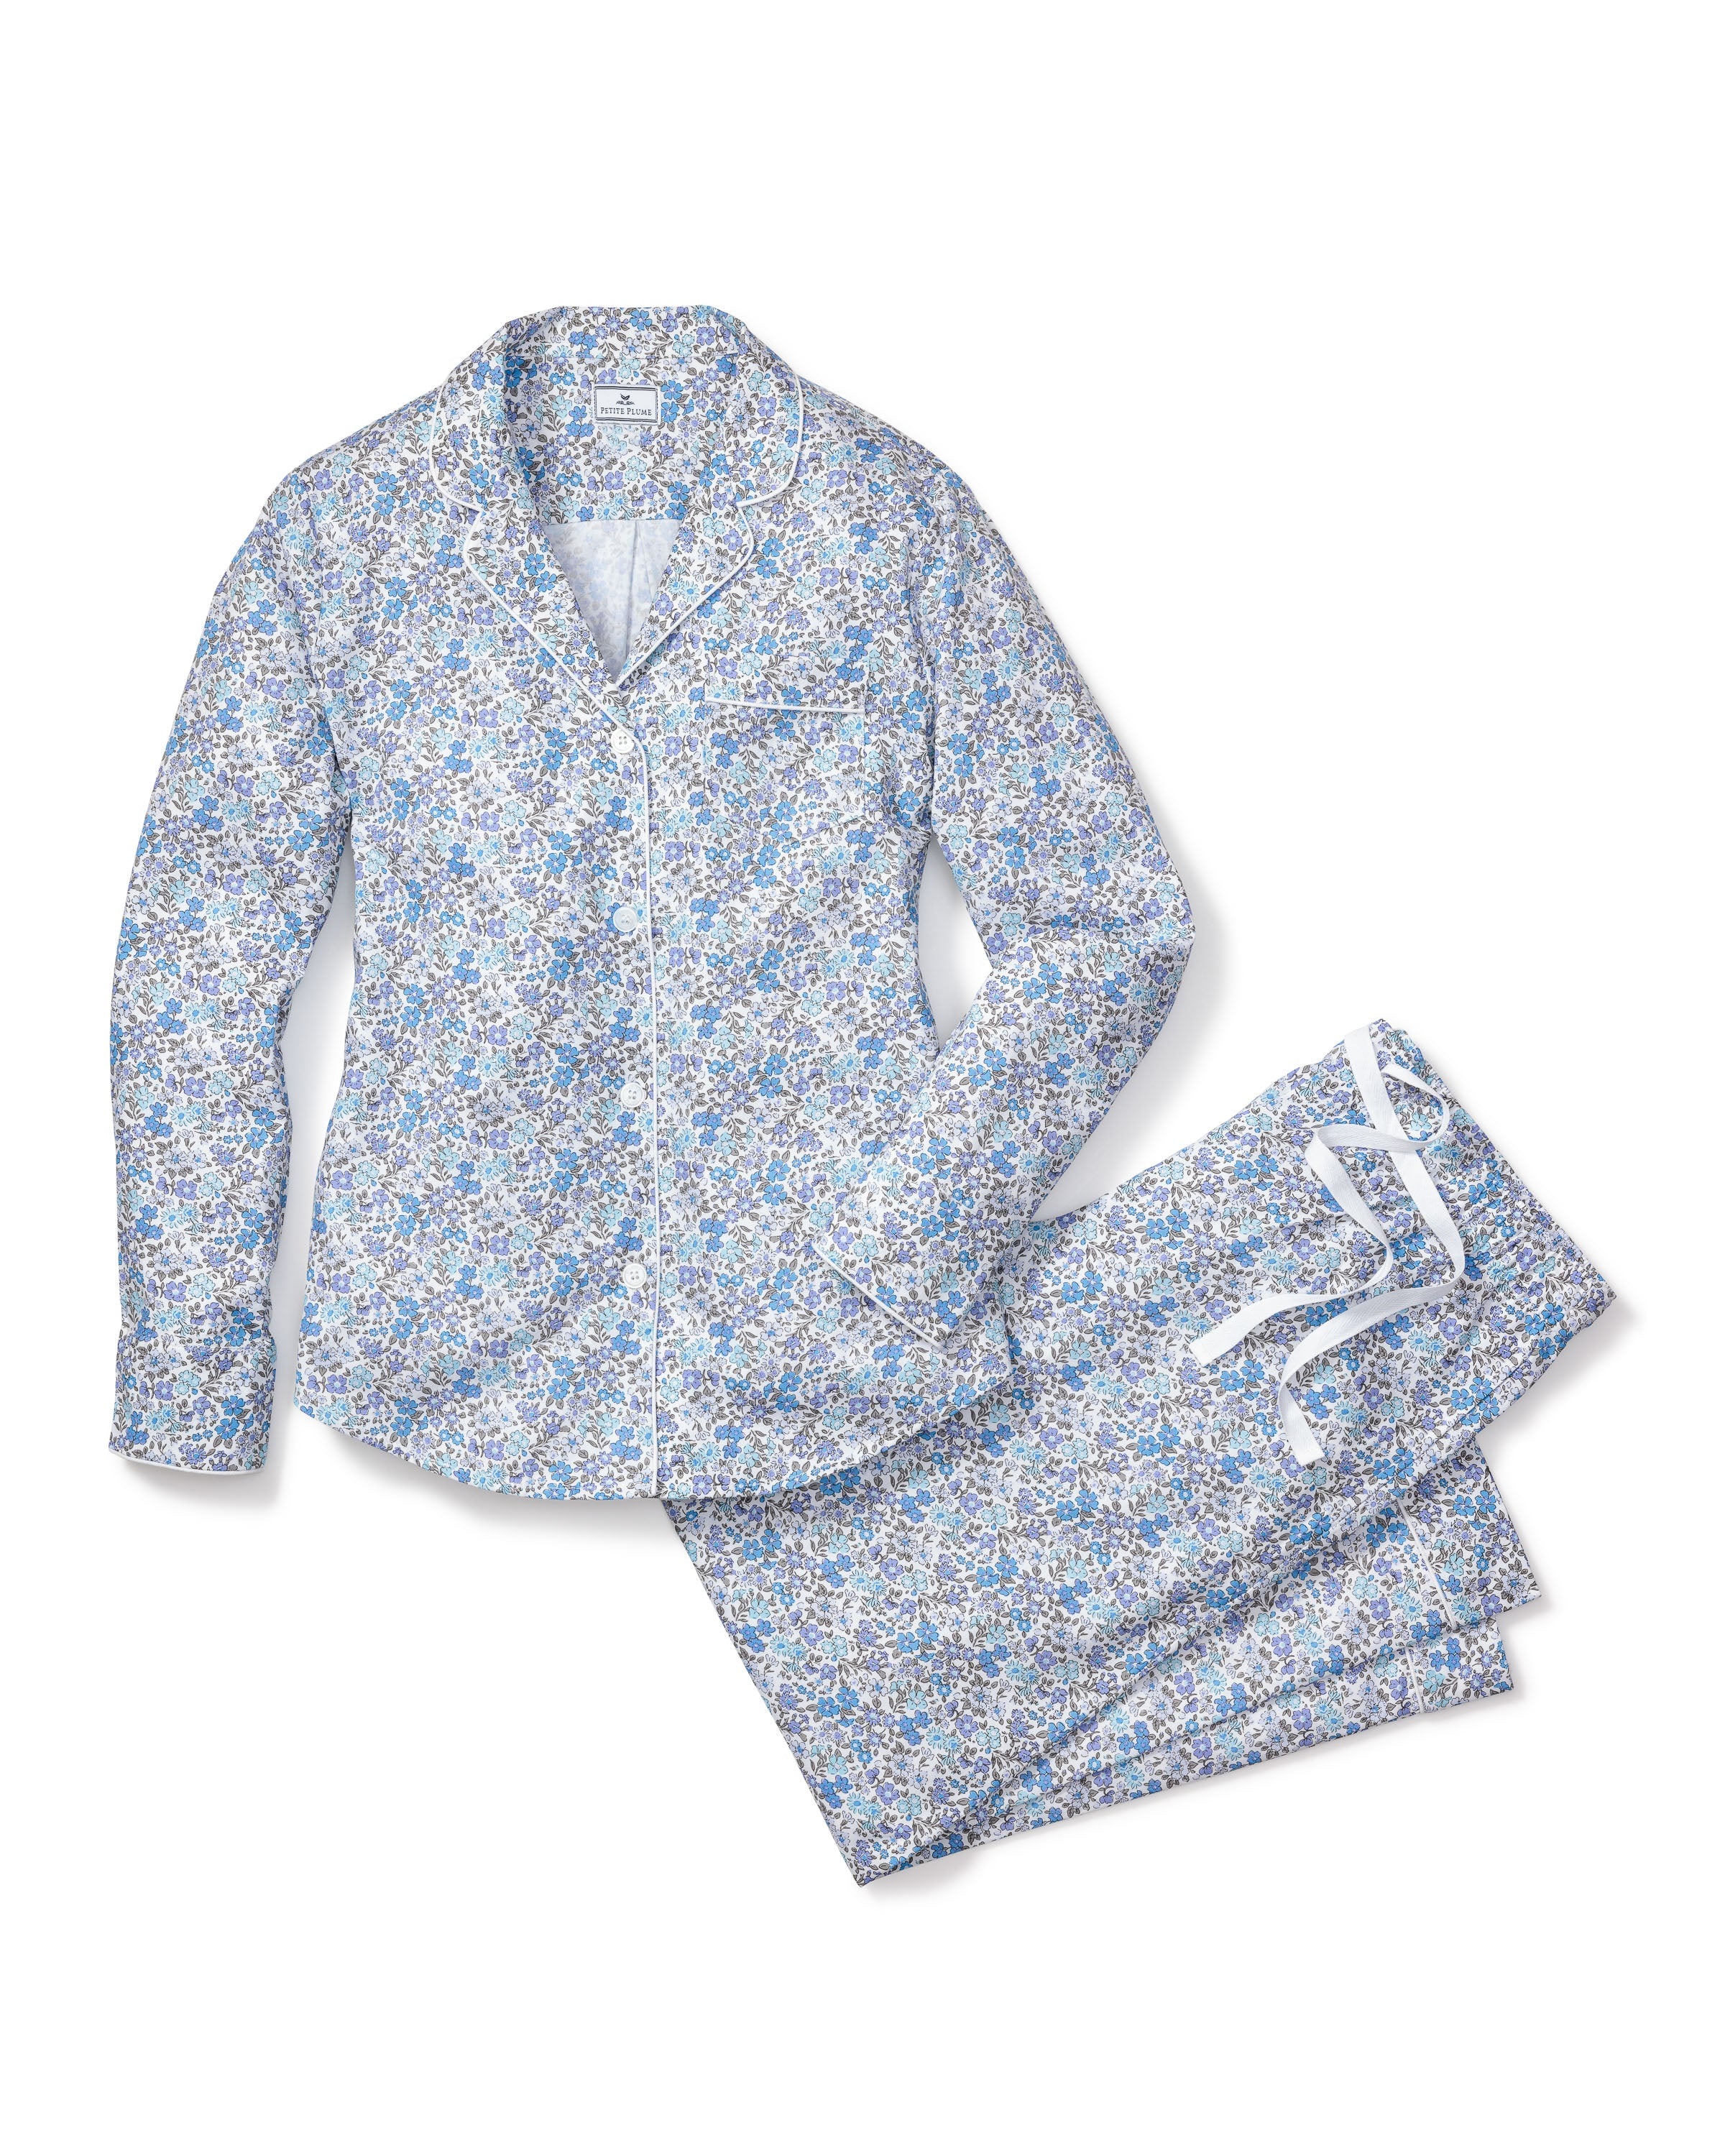 Women's Twill Pajama Set in Fleur D'Azur